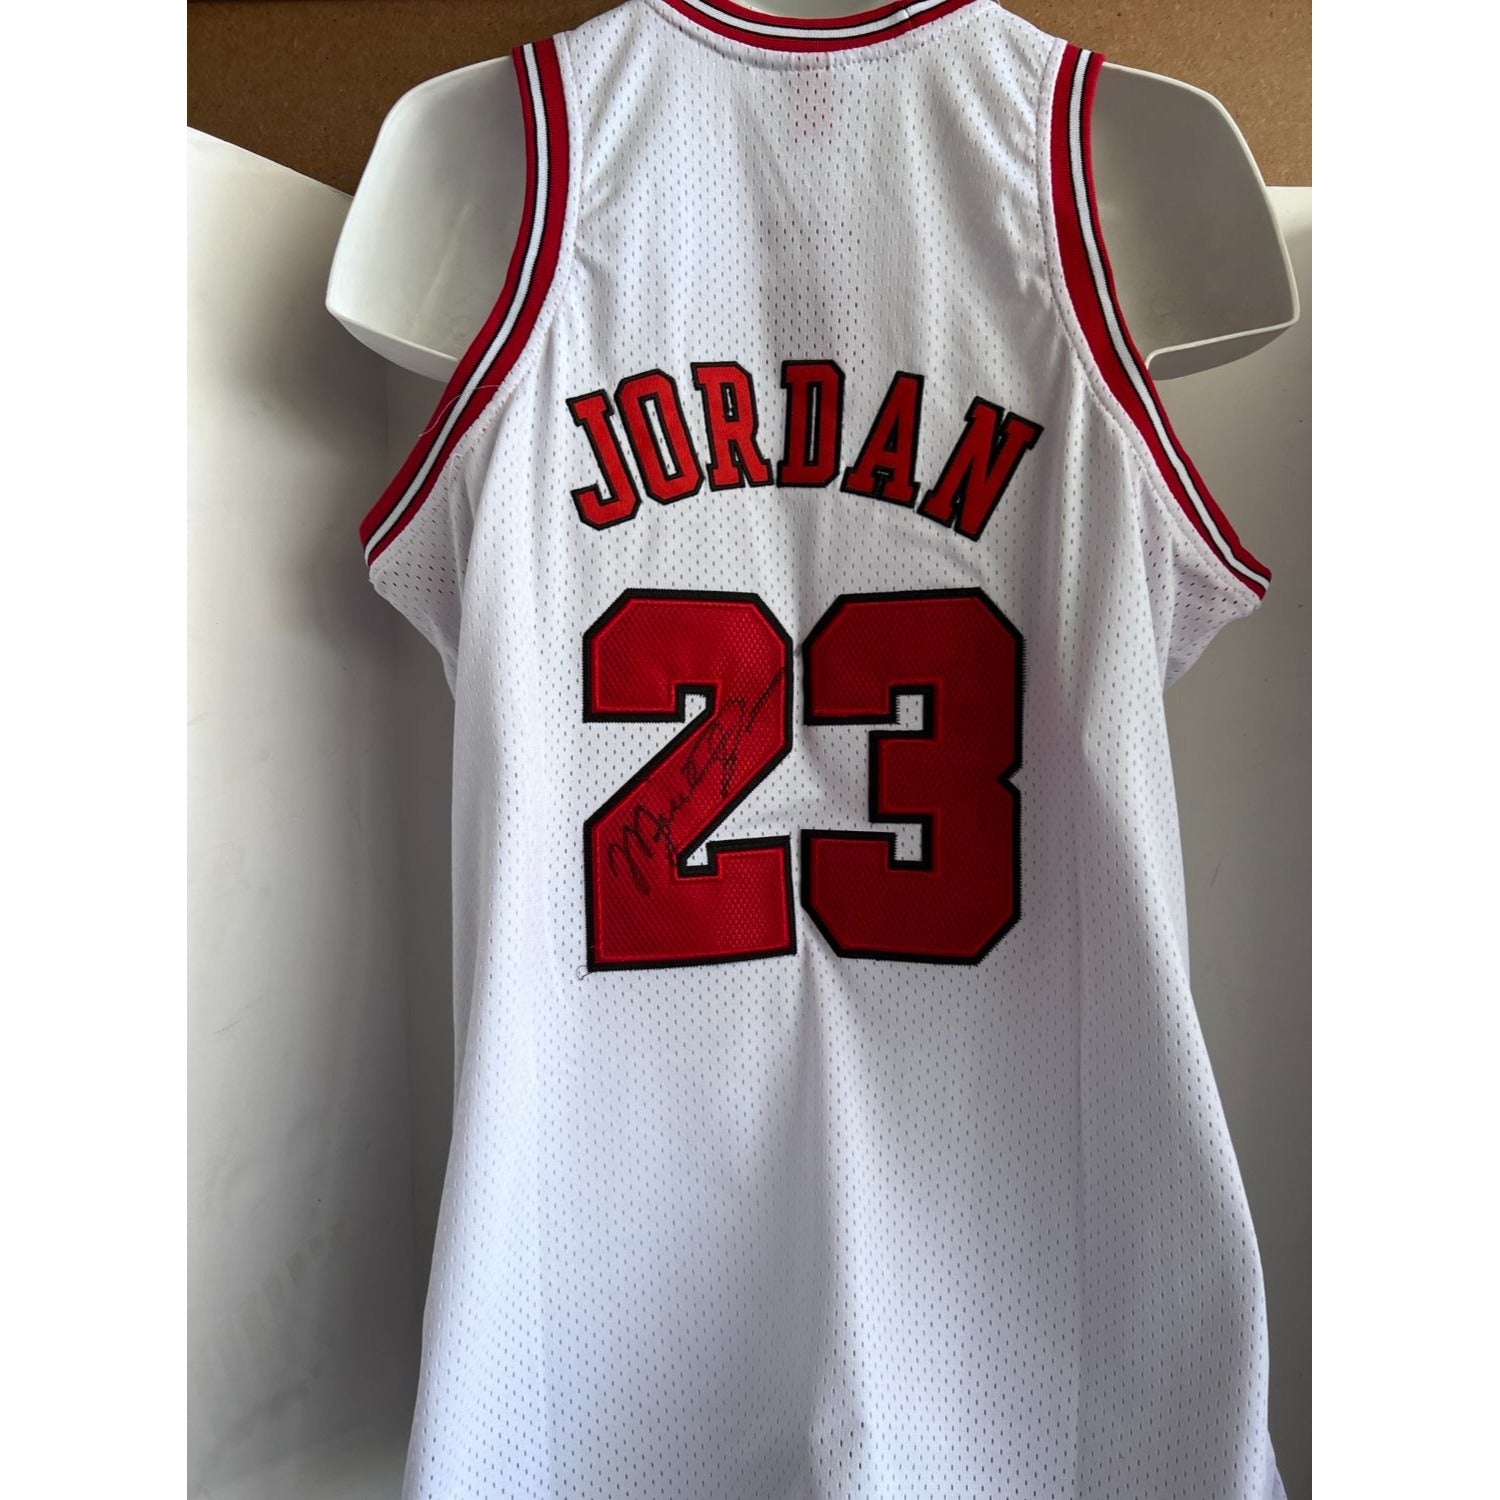 Michael Jordan Chicago Bulls hardwood classics size 44 large sign with proof